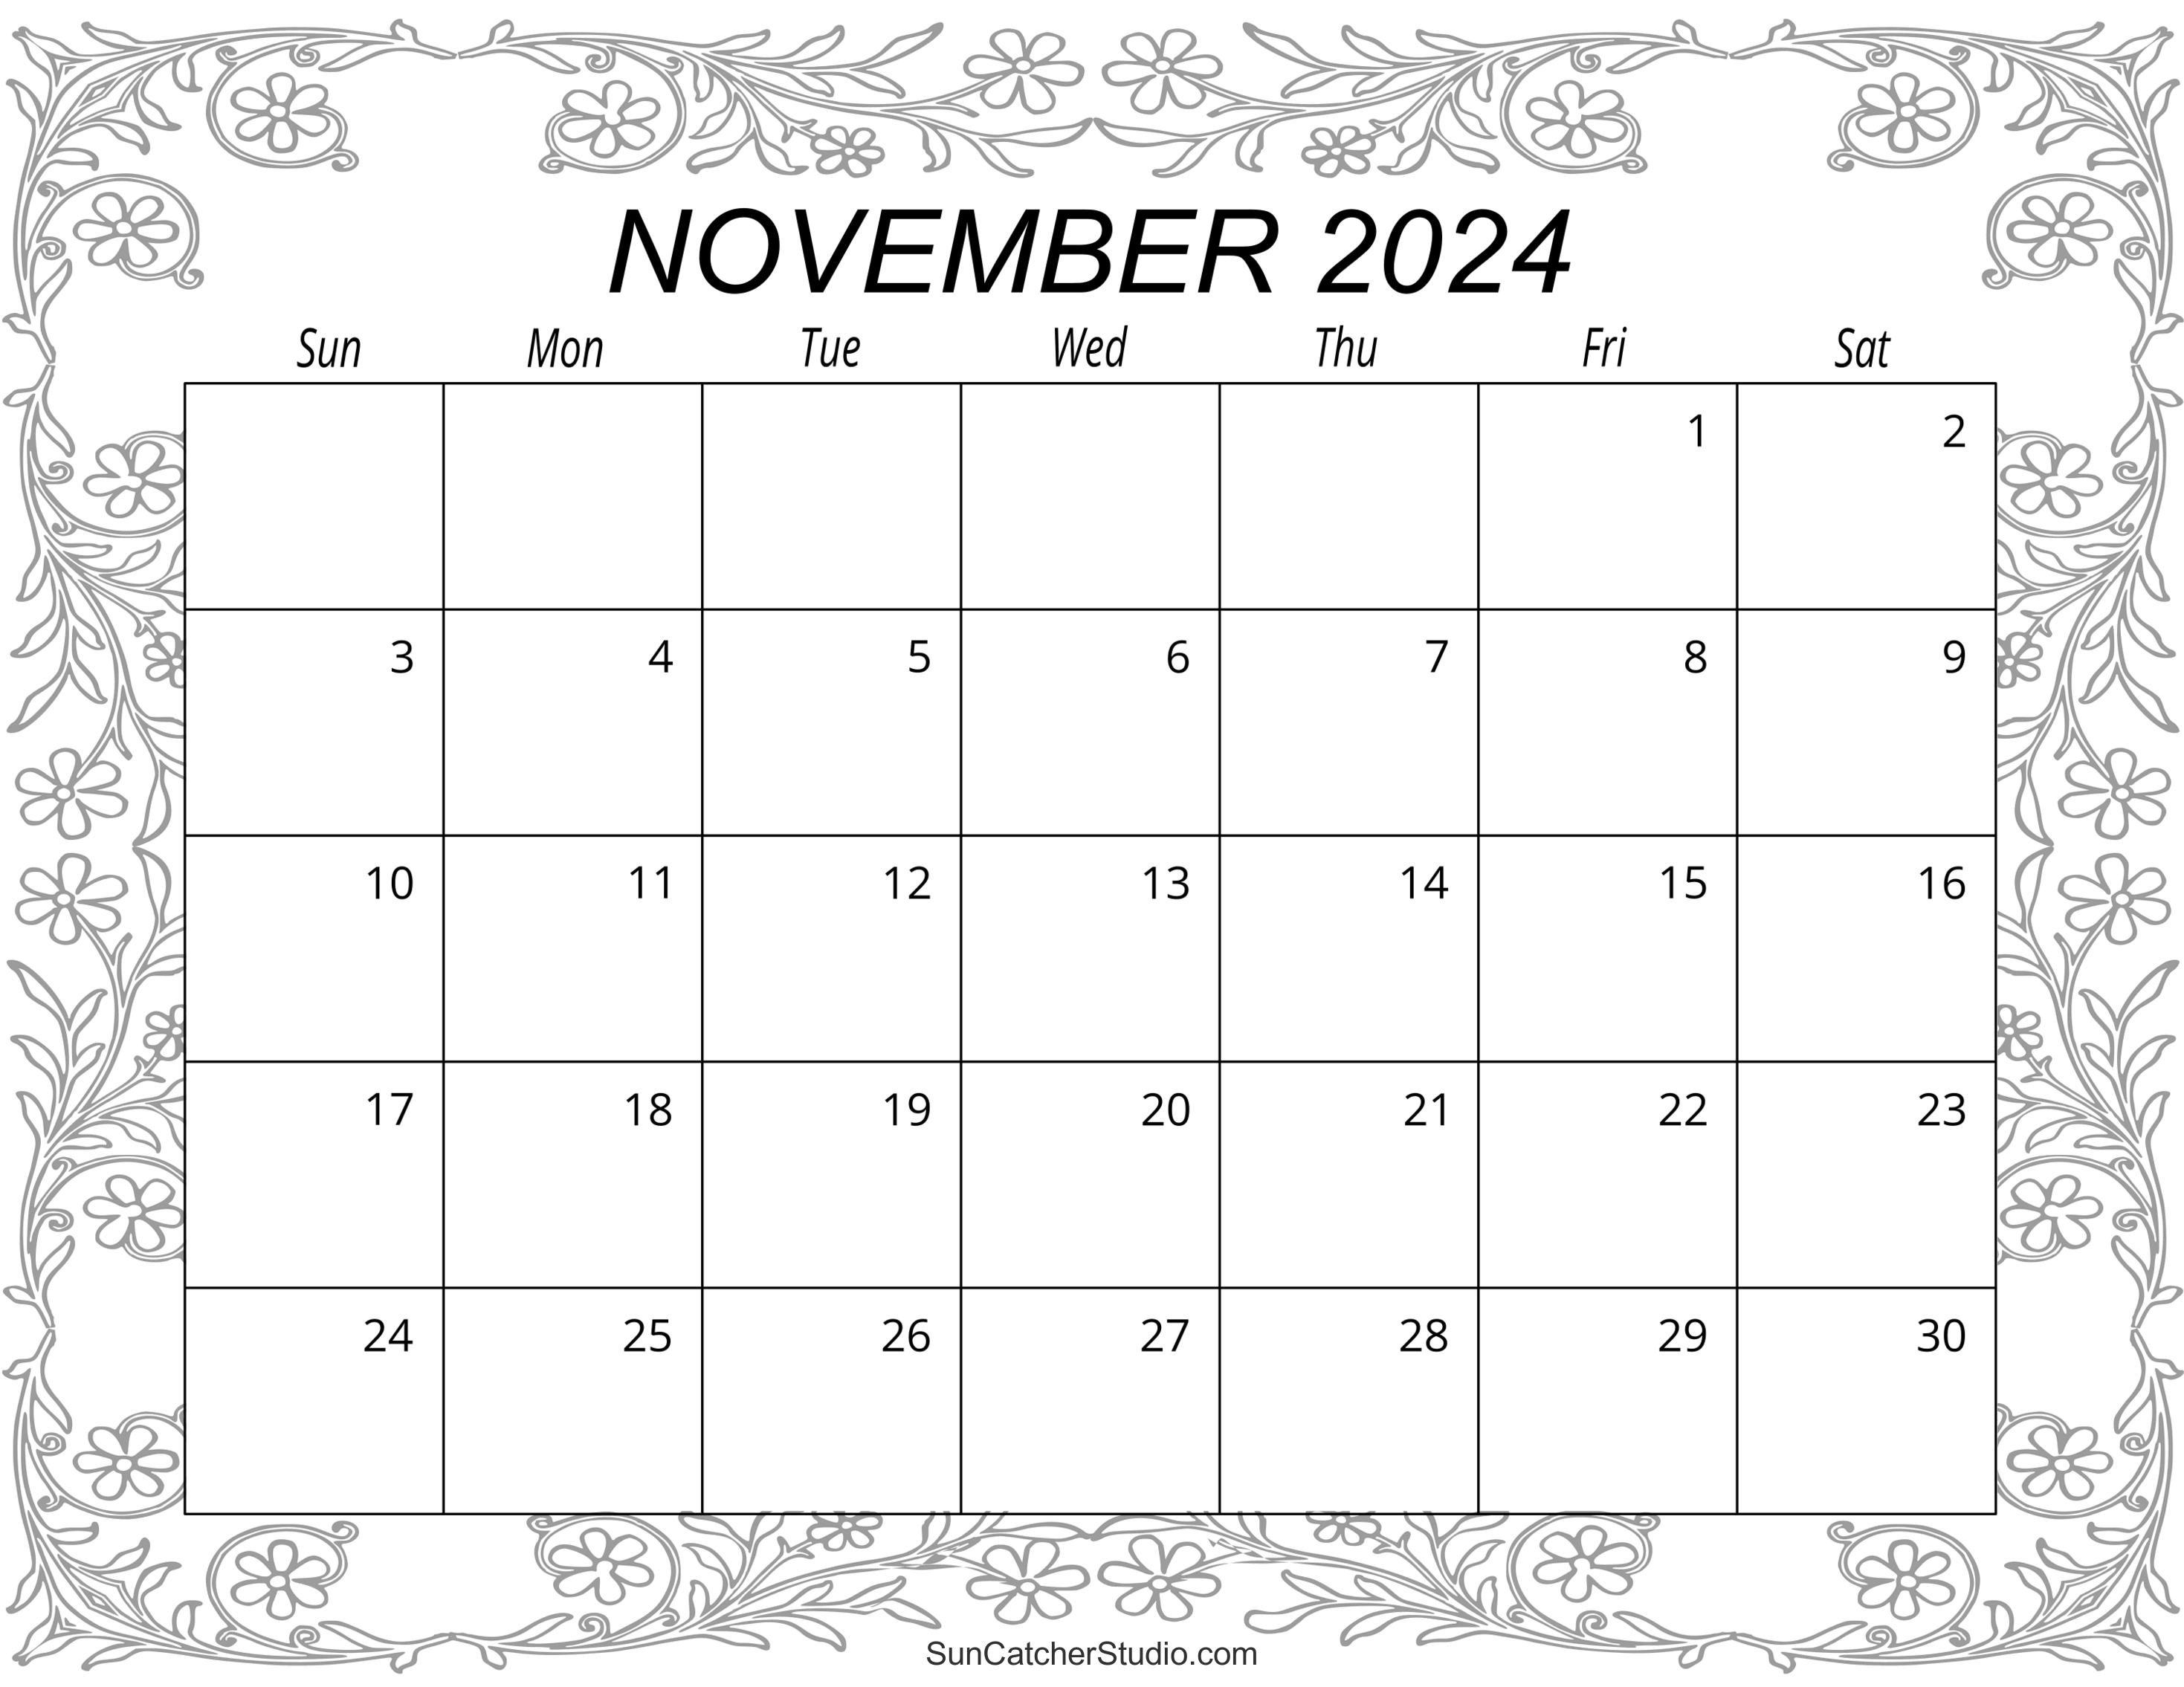 November 2024 Calendar (Free Printable) DIY Projects, Patterns